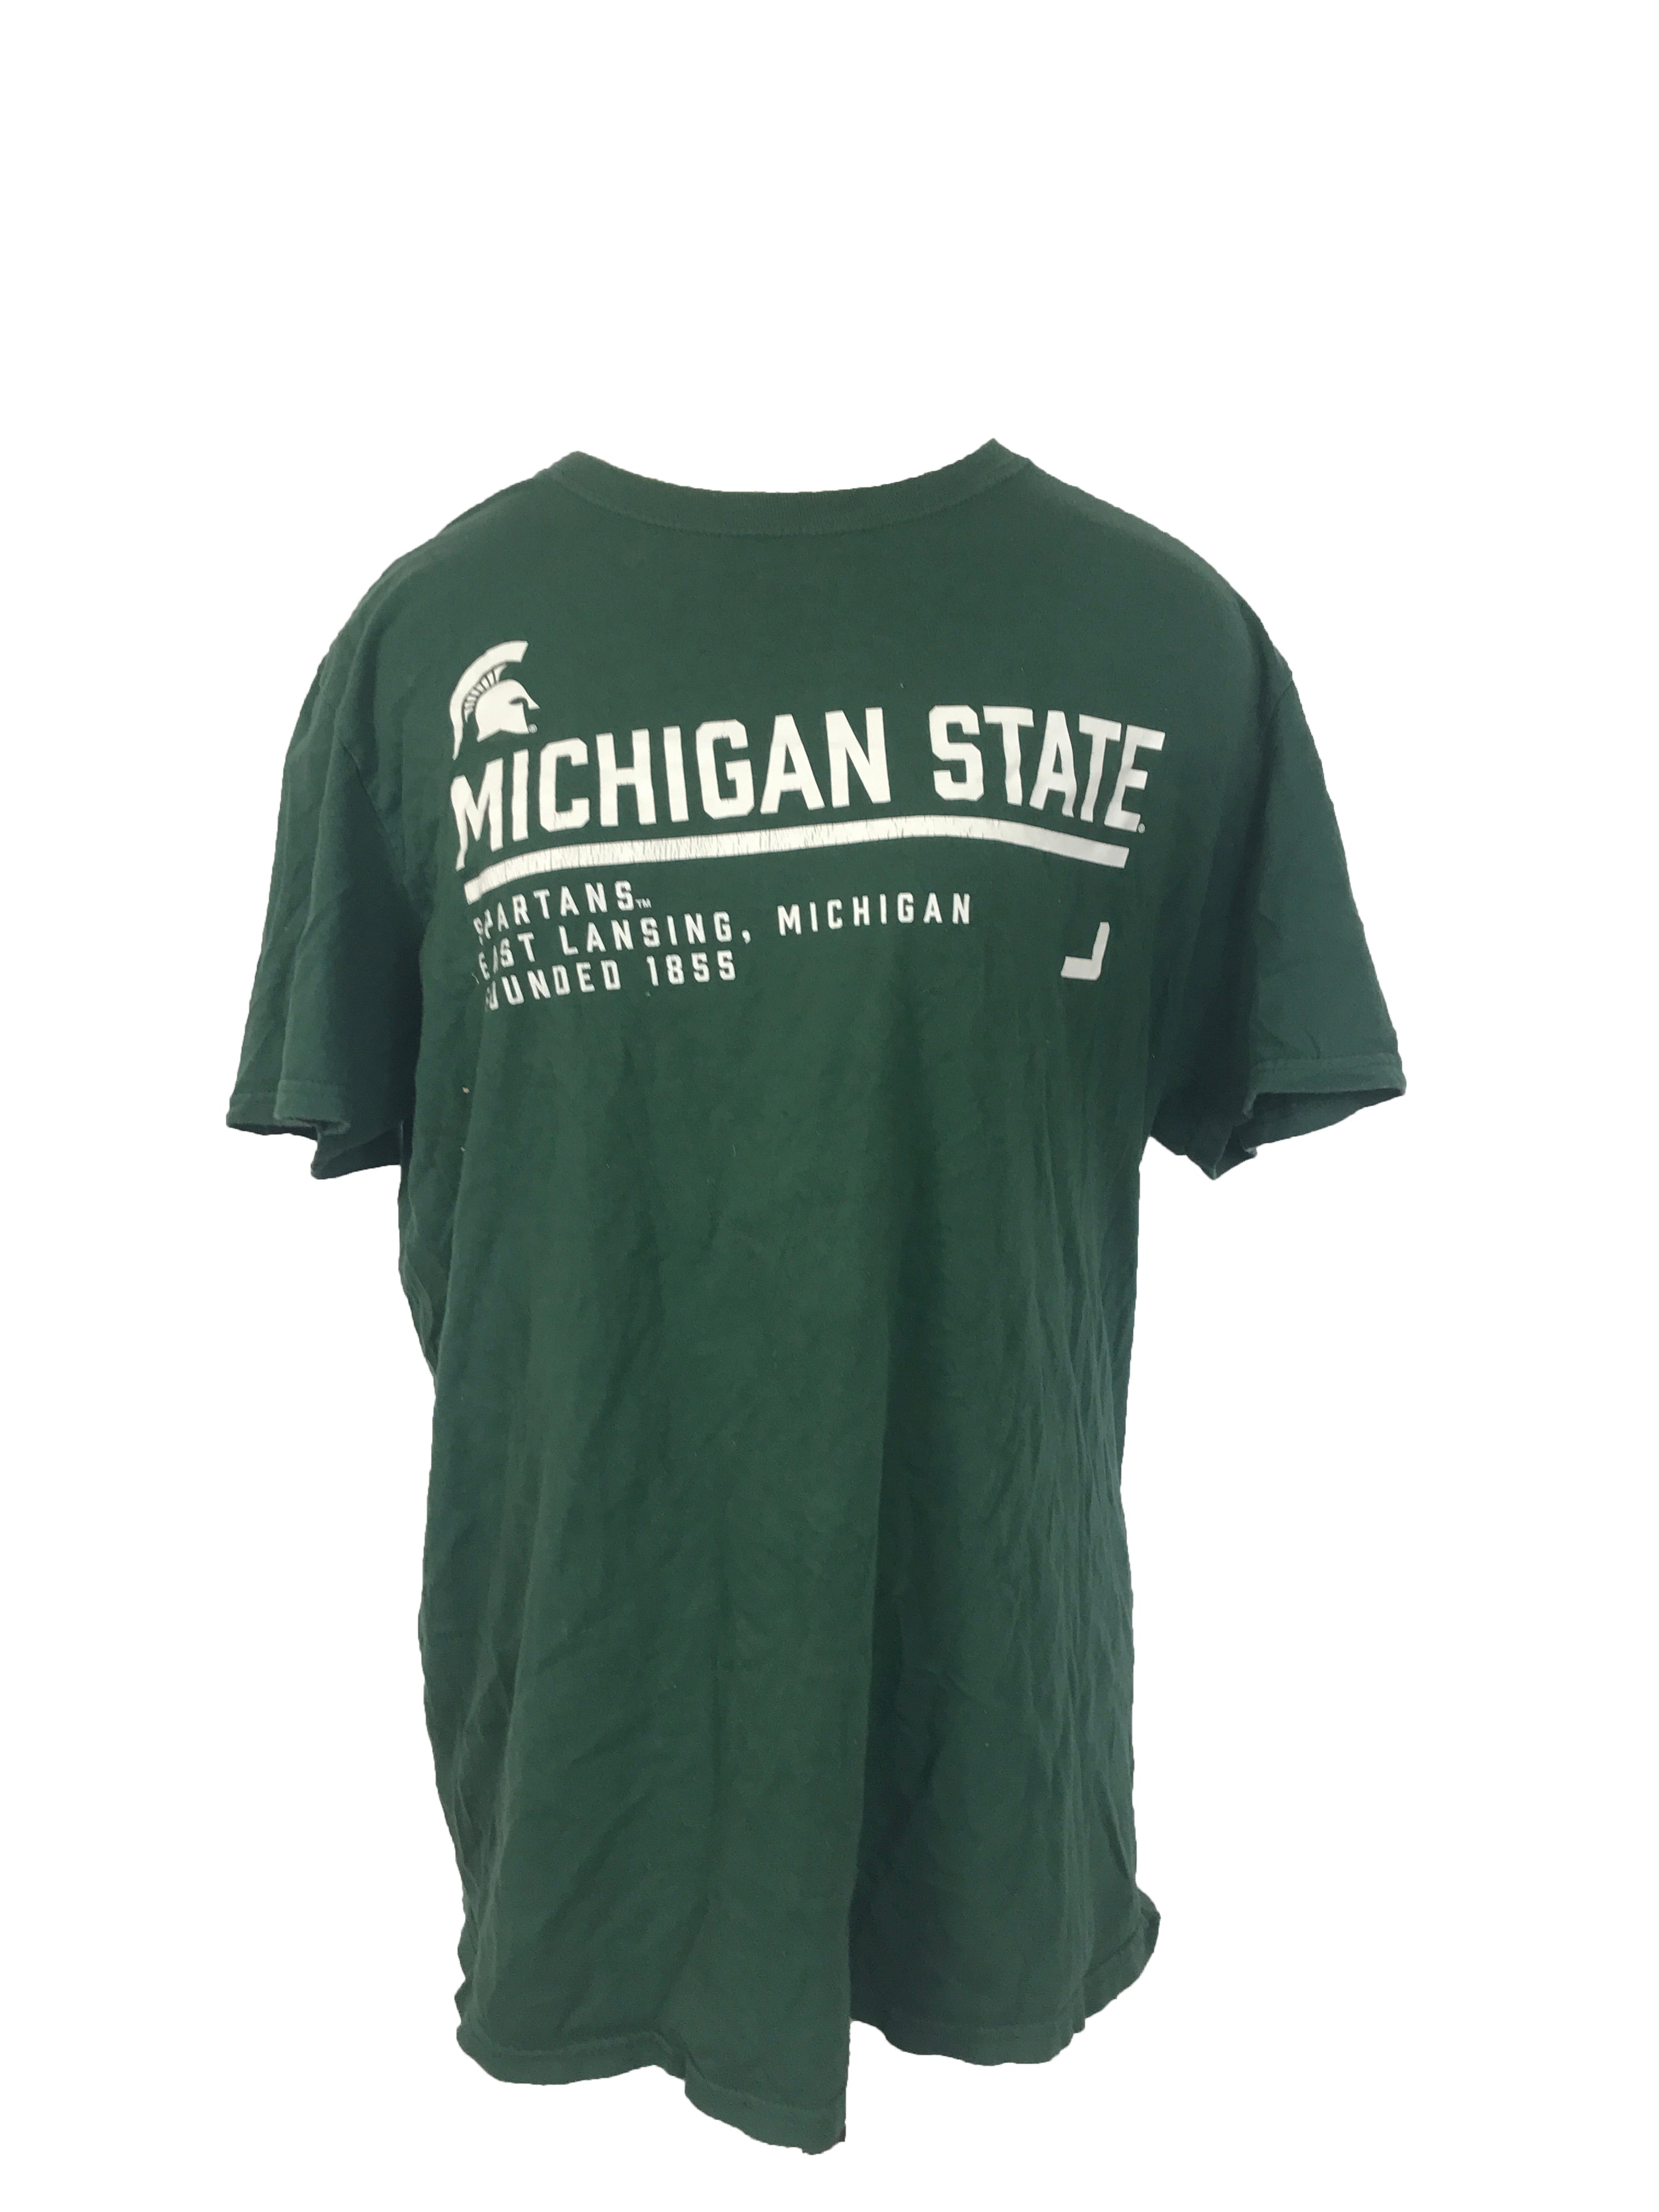 Michigan State Green T-Shirt Unisex Size Large